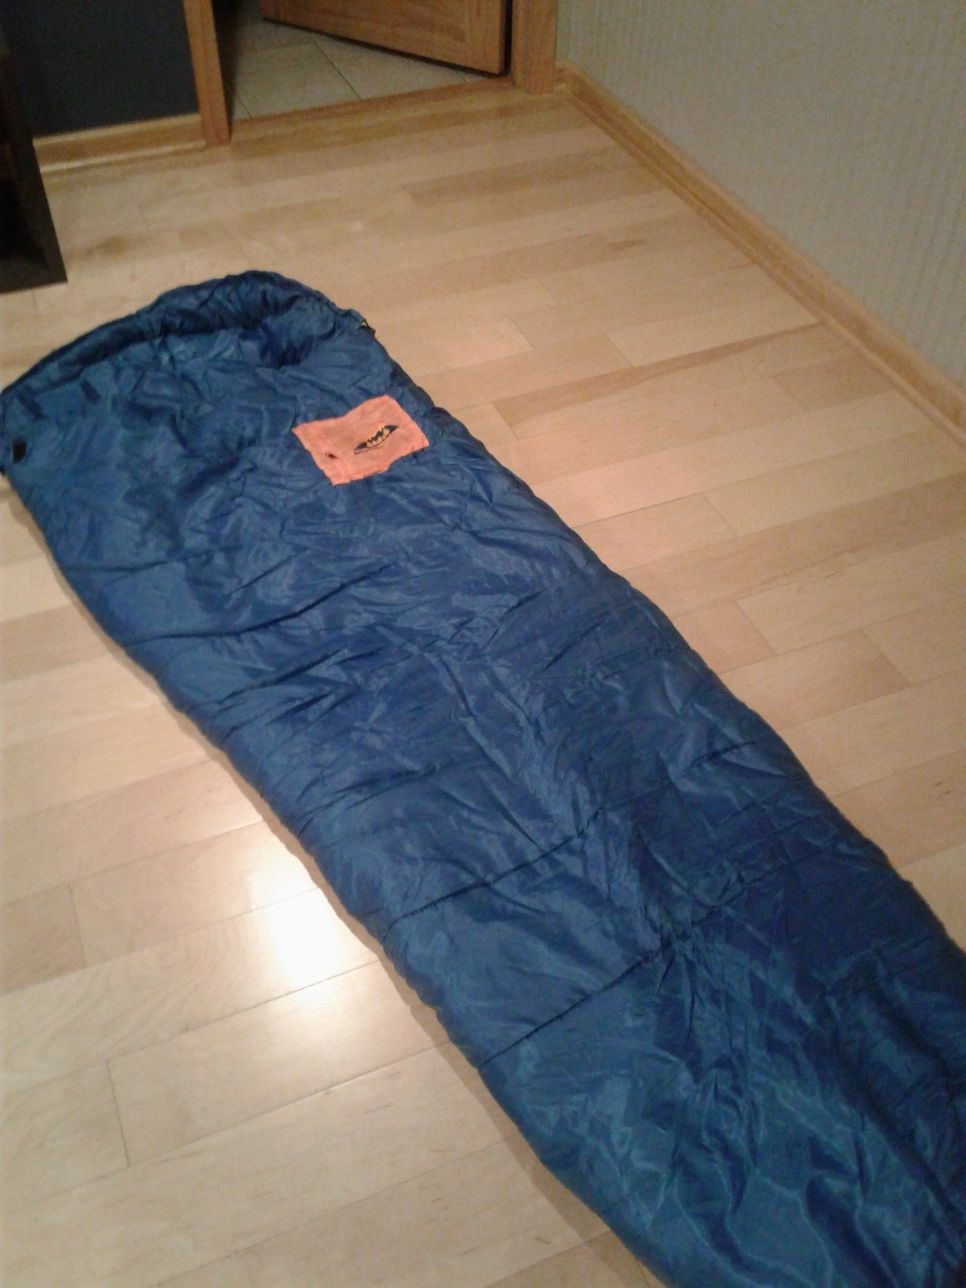 REI Authentic adventure sleeping bag. Perfect condition